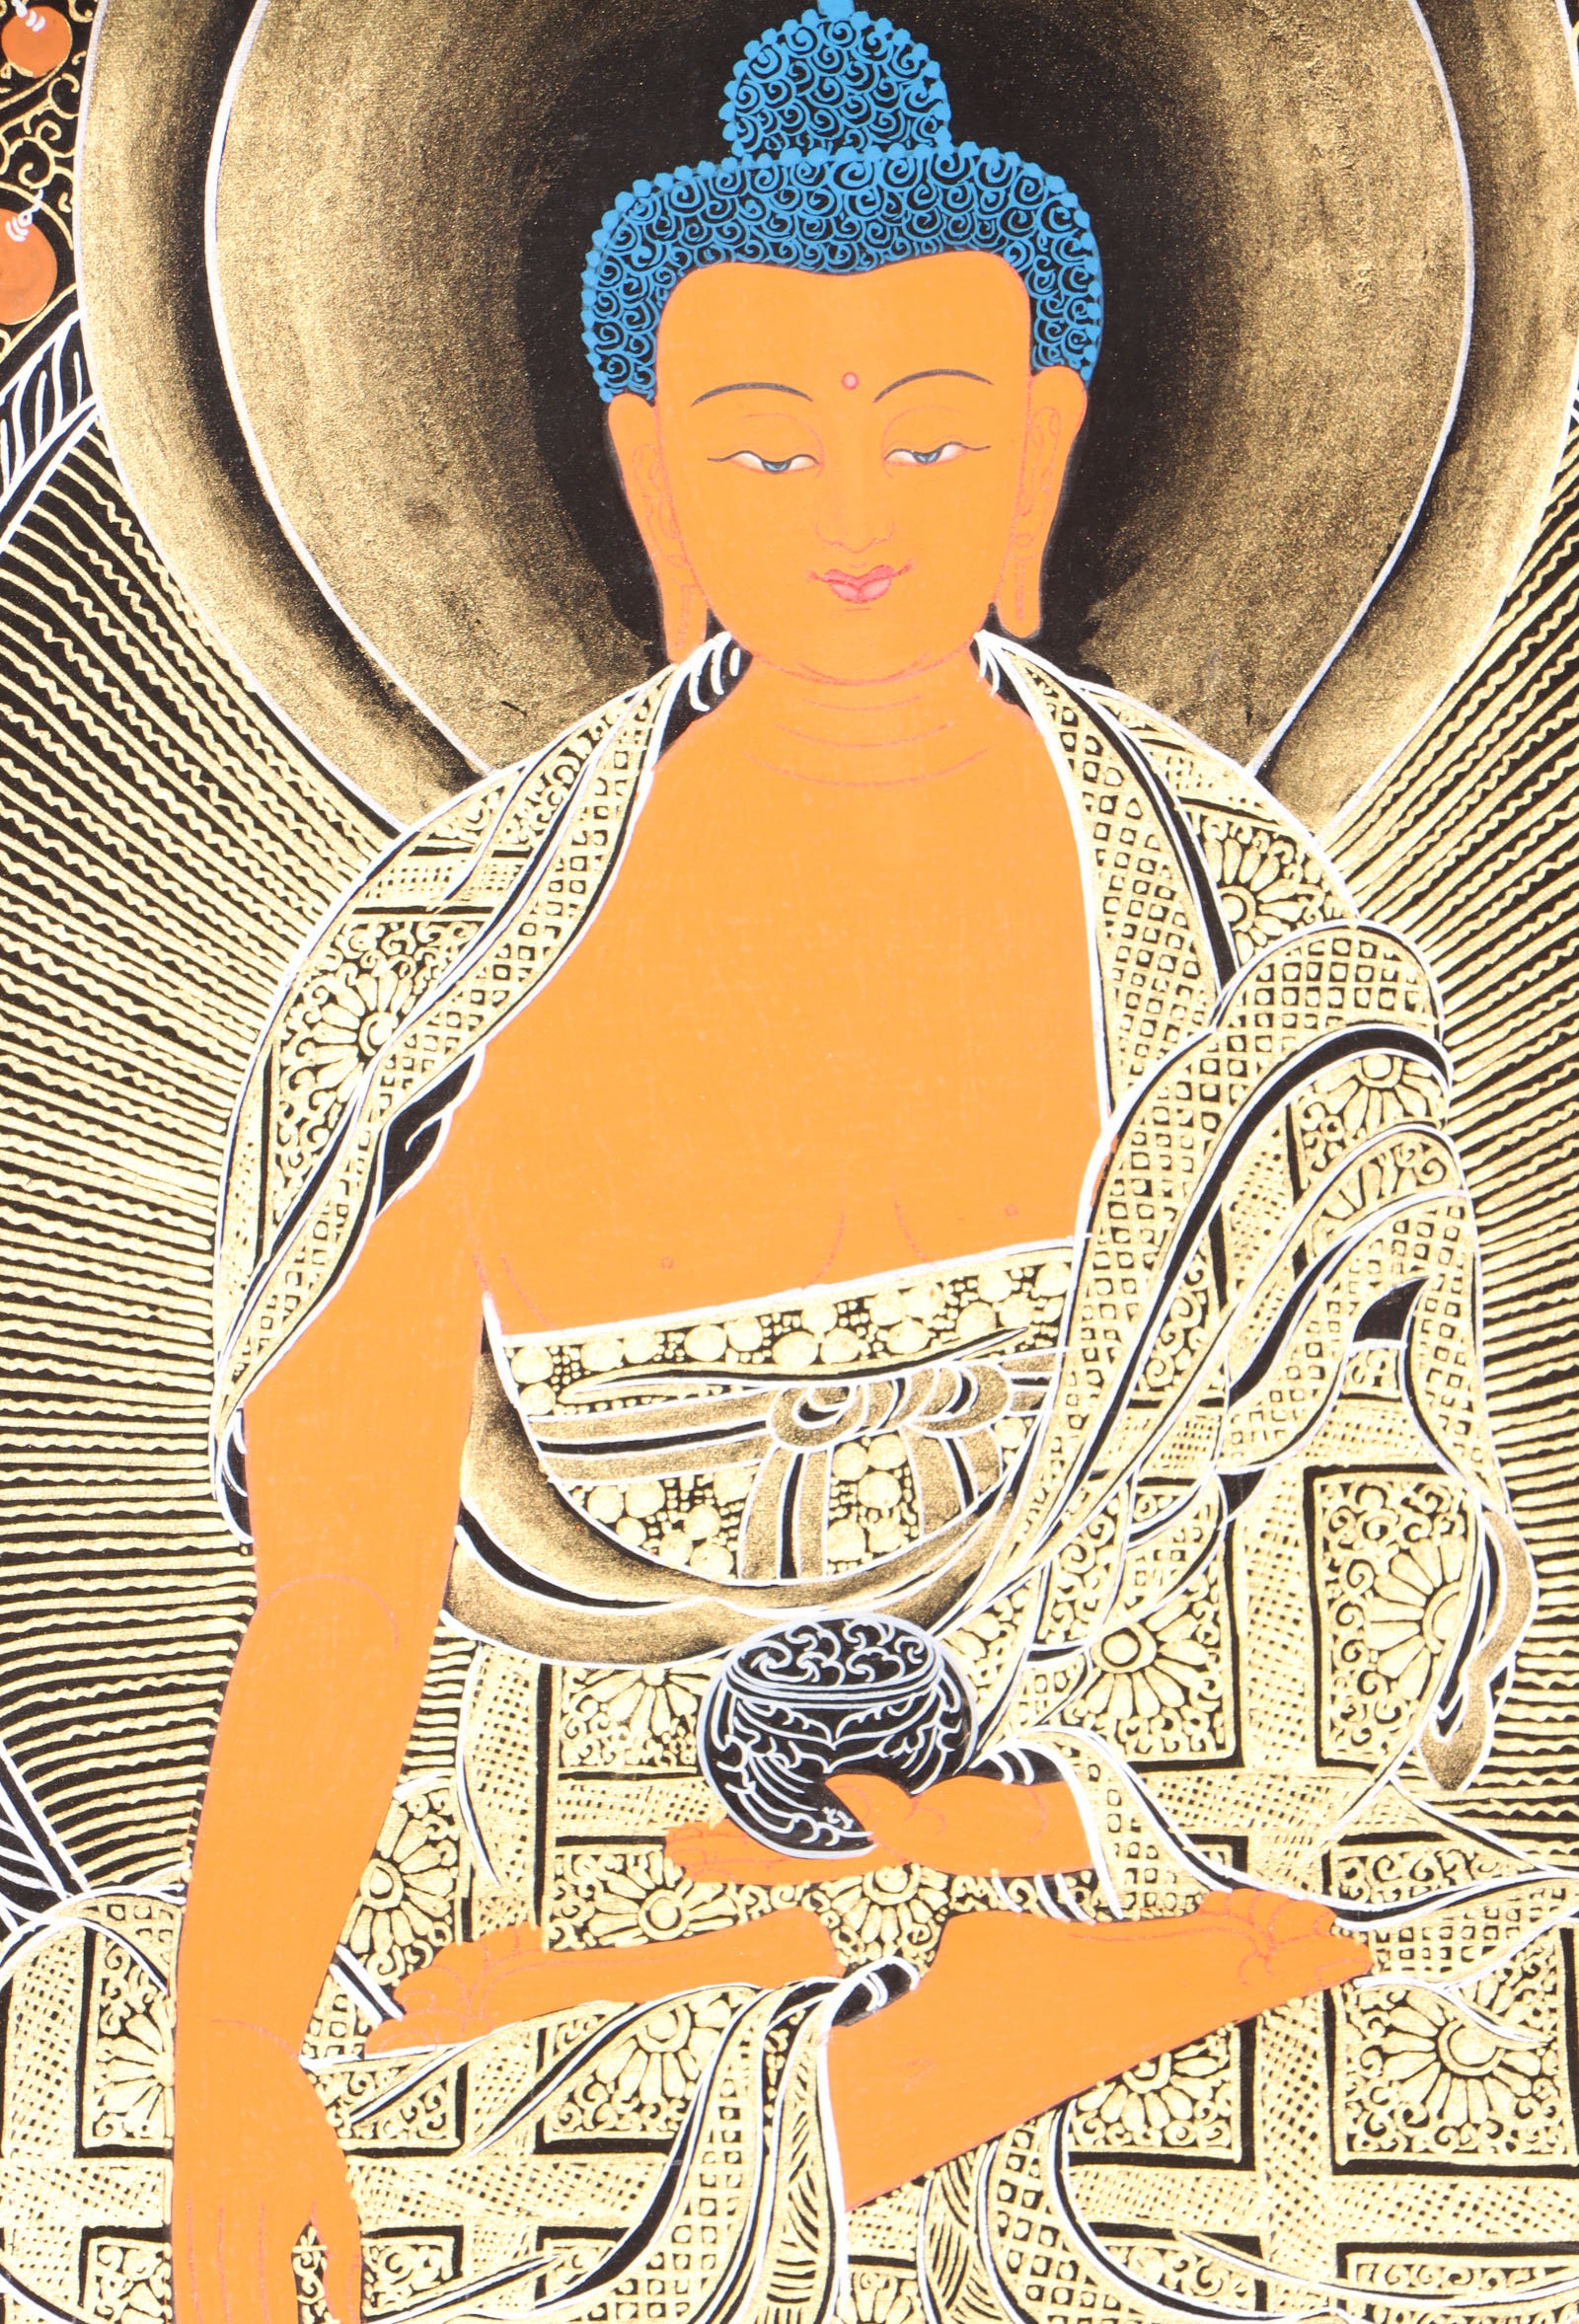 Shakyamuni Buddha Thangka for wall decor and enlightment.